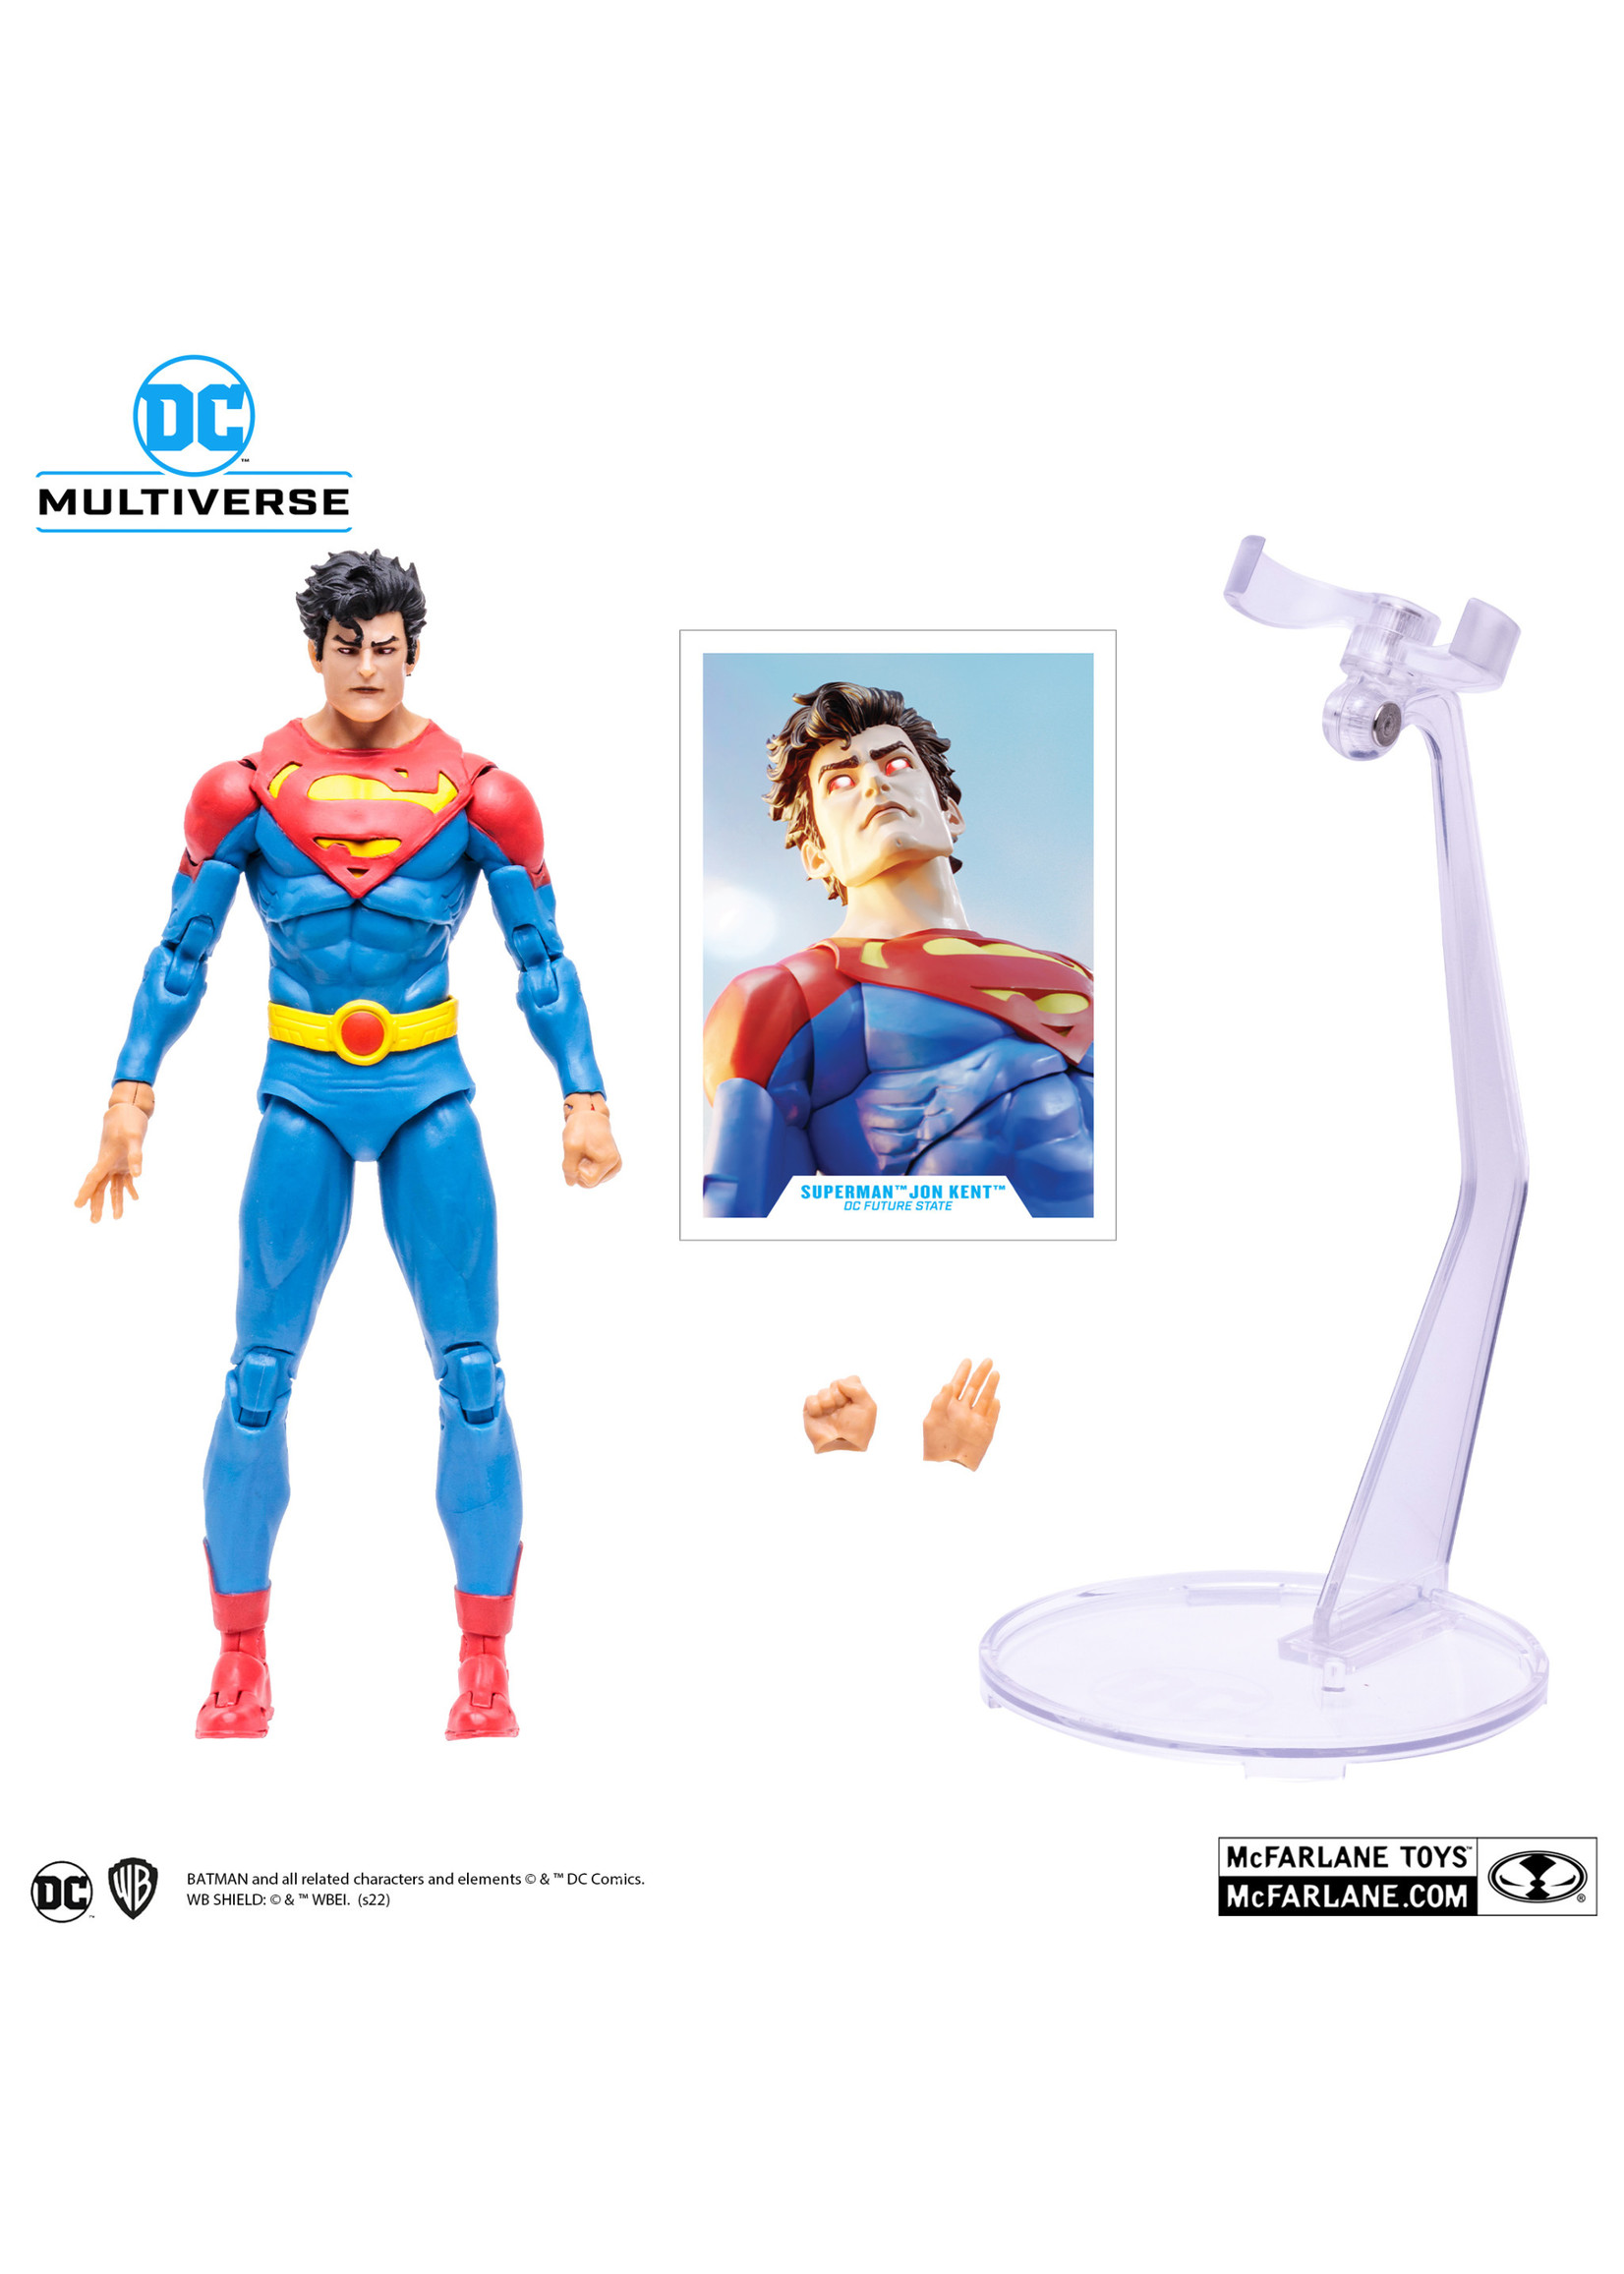 McFarlane toys DC Multiverse - Superman - Jon Kent